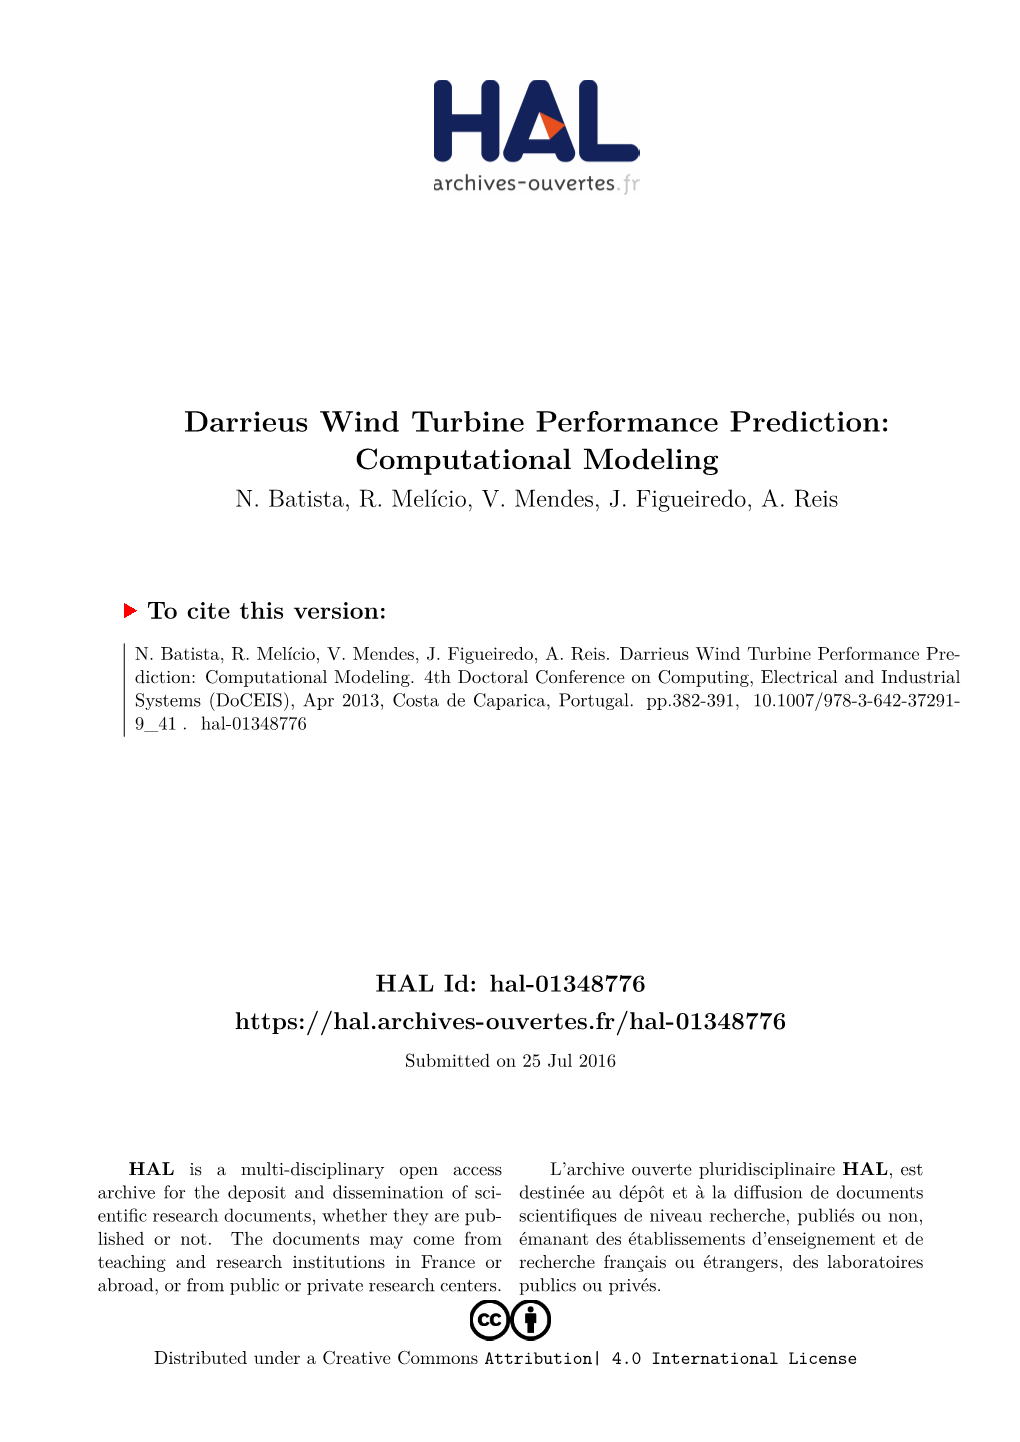 Darrieus Wind Turbine Performance Prediction: Computational Modeling N